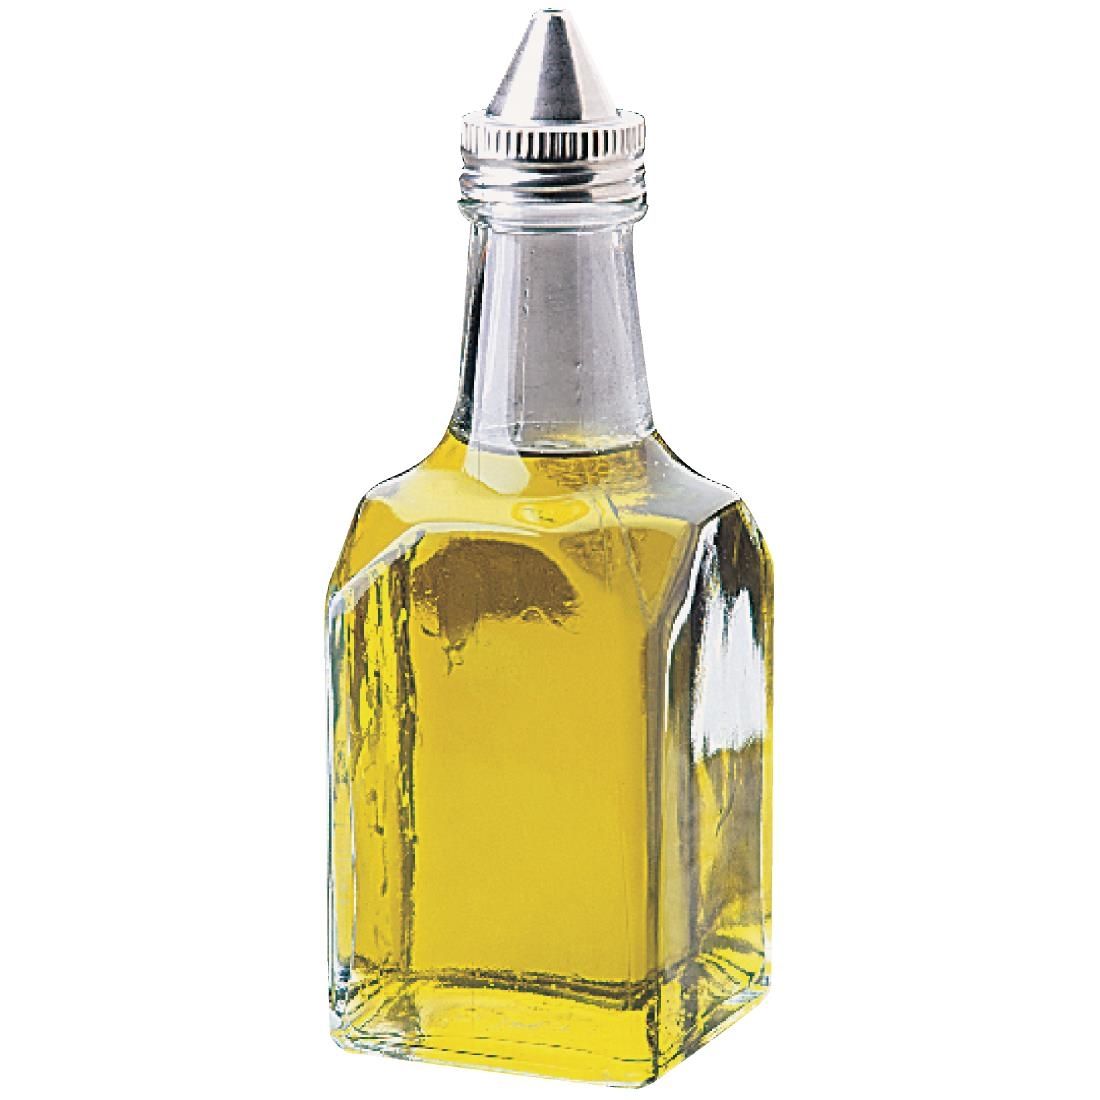 Oil and Vinegar Cruets (Pack of 12)